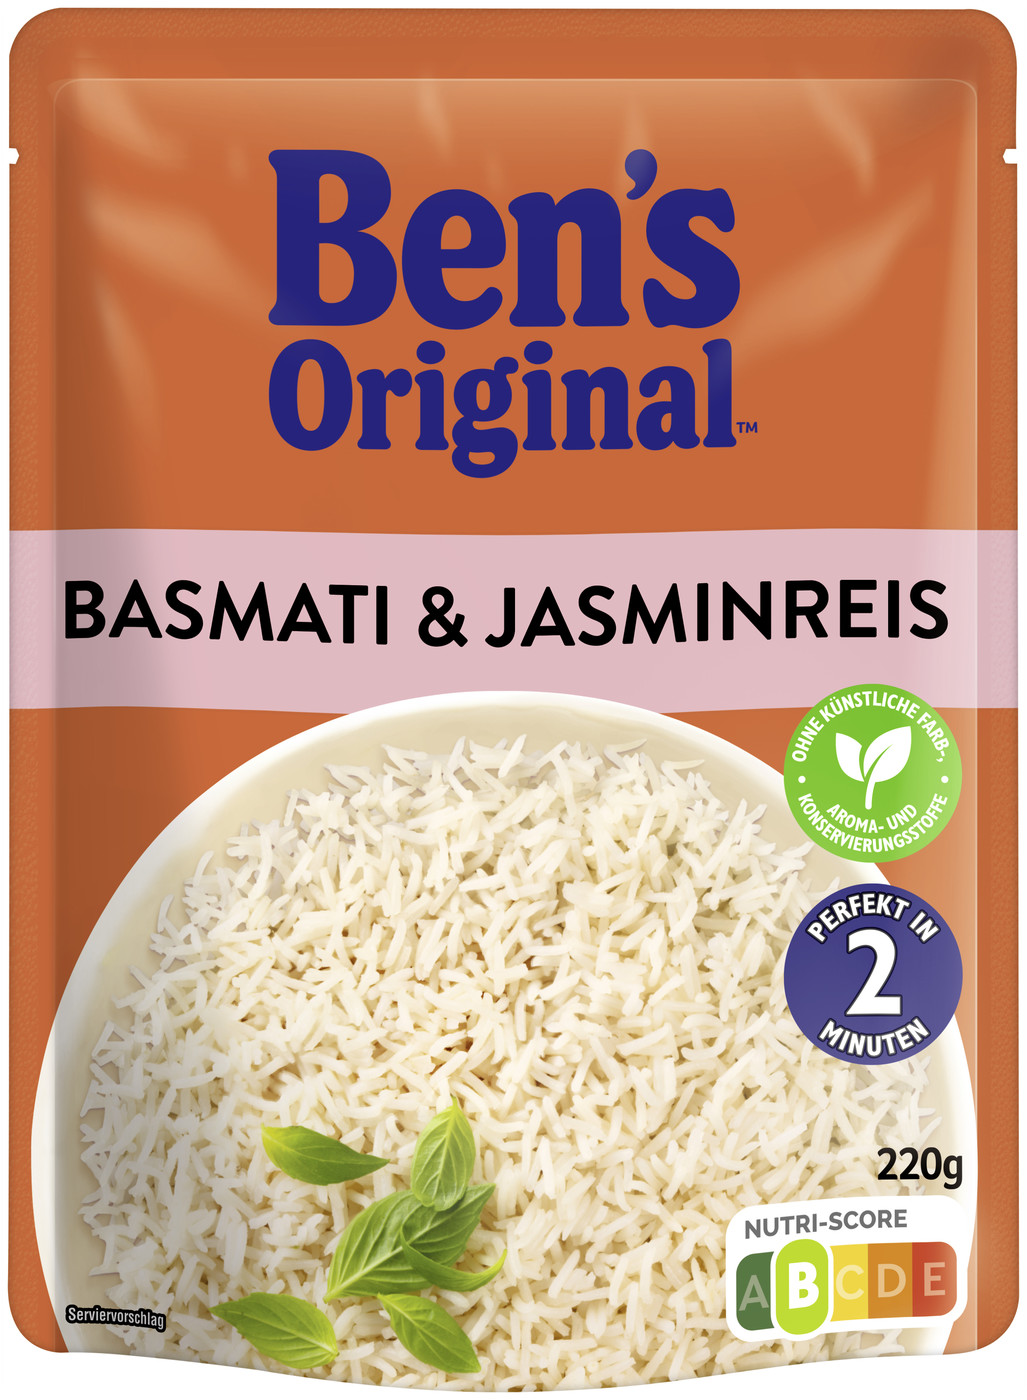 Ben's Original Express Basmati & Jasminreis 220G